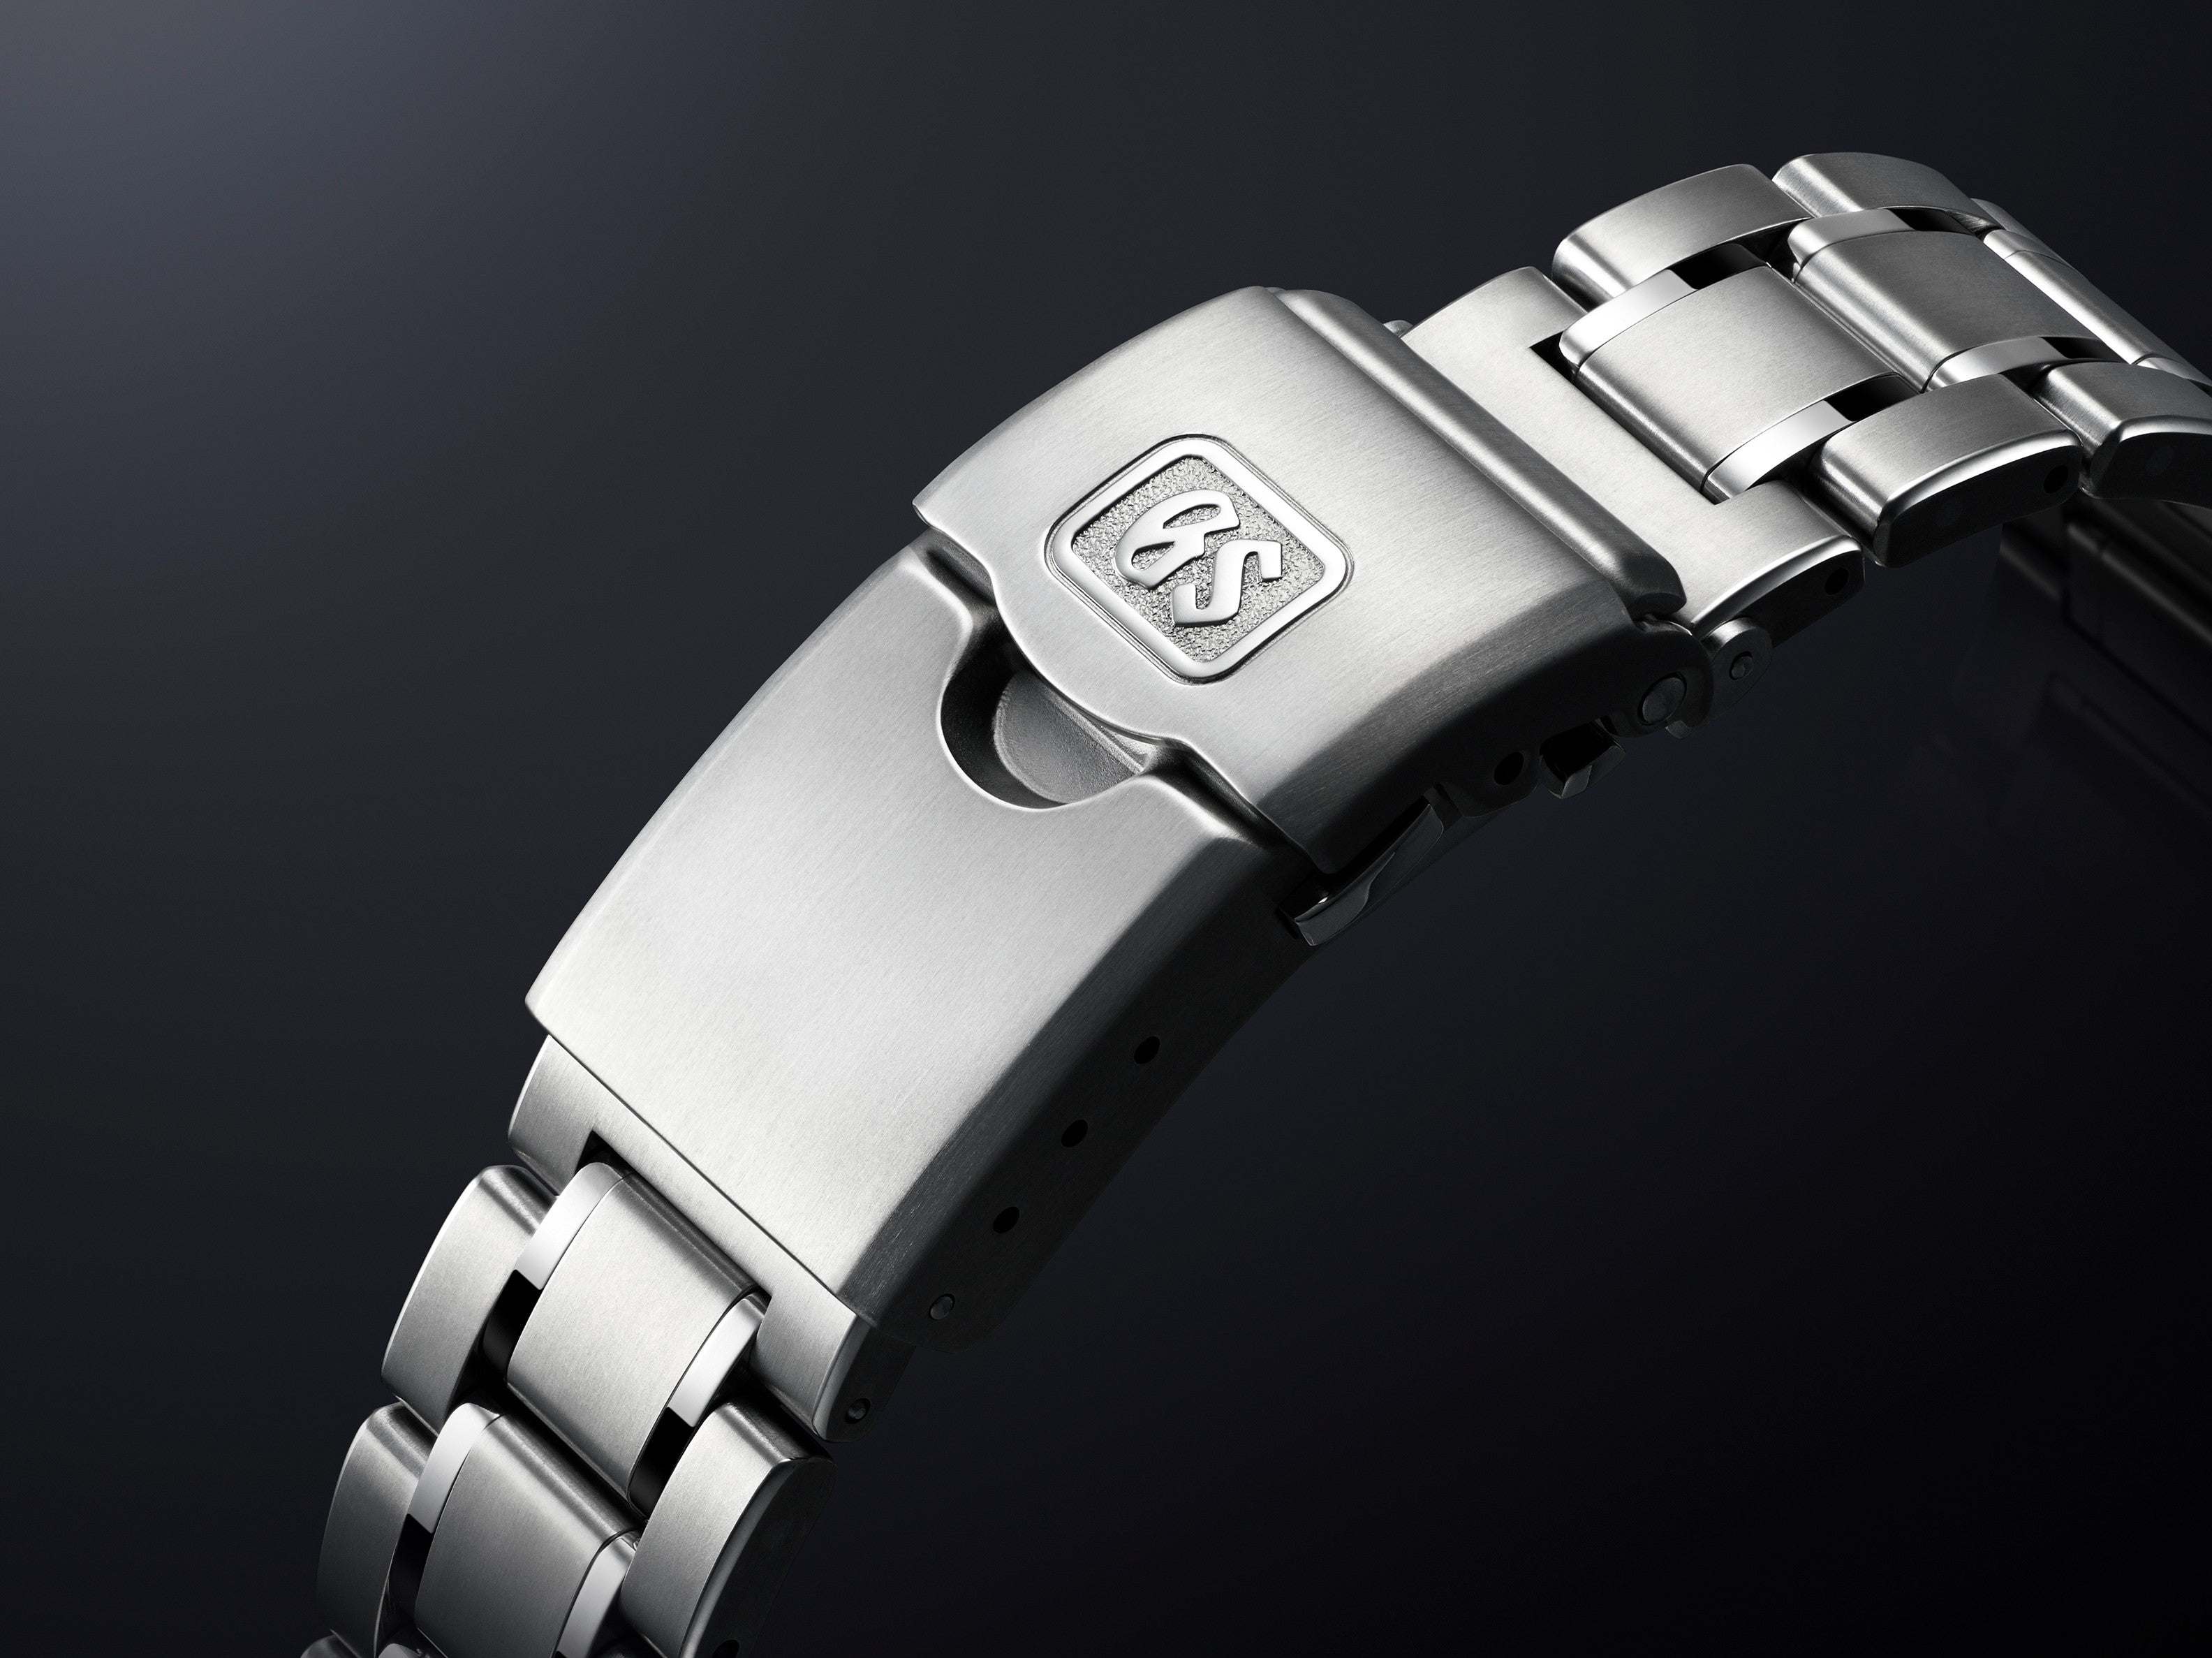 Grand Seiko Evolution 9, Seiko Titanium Watch, Harley's Time LLC